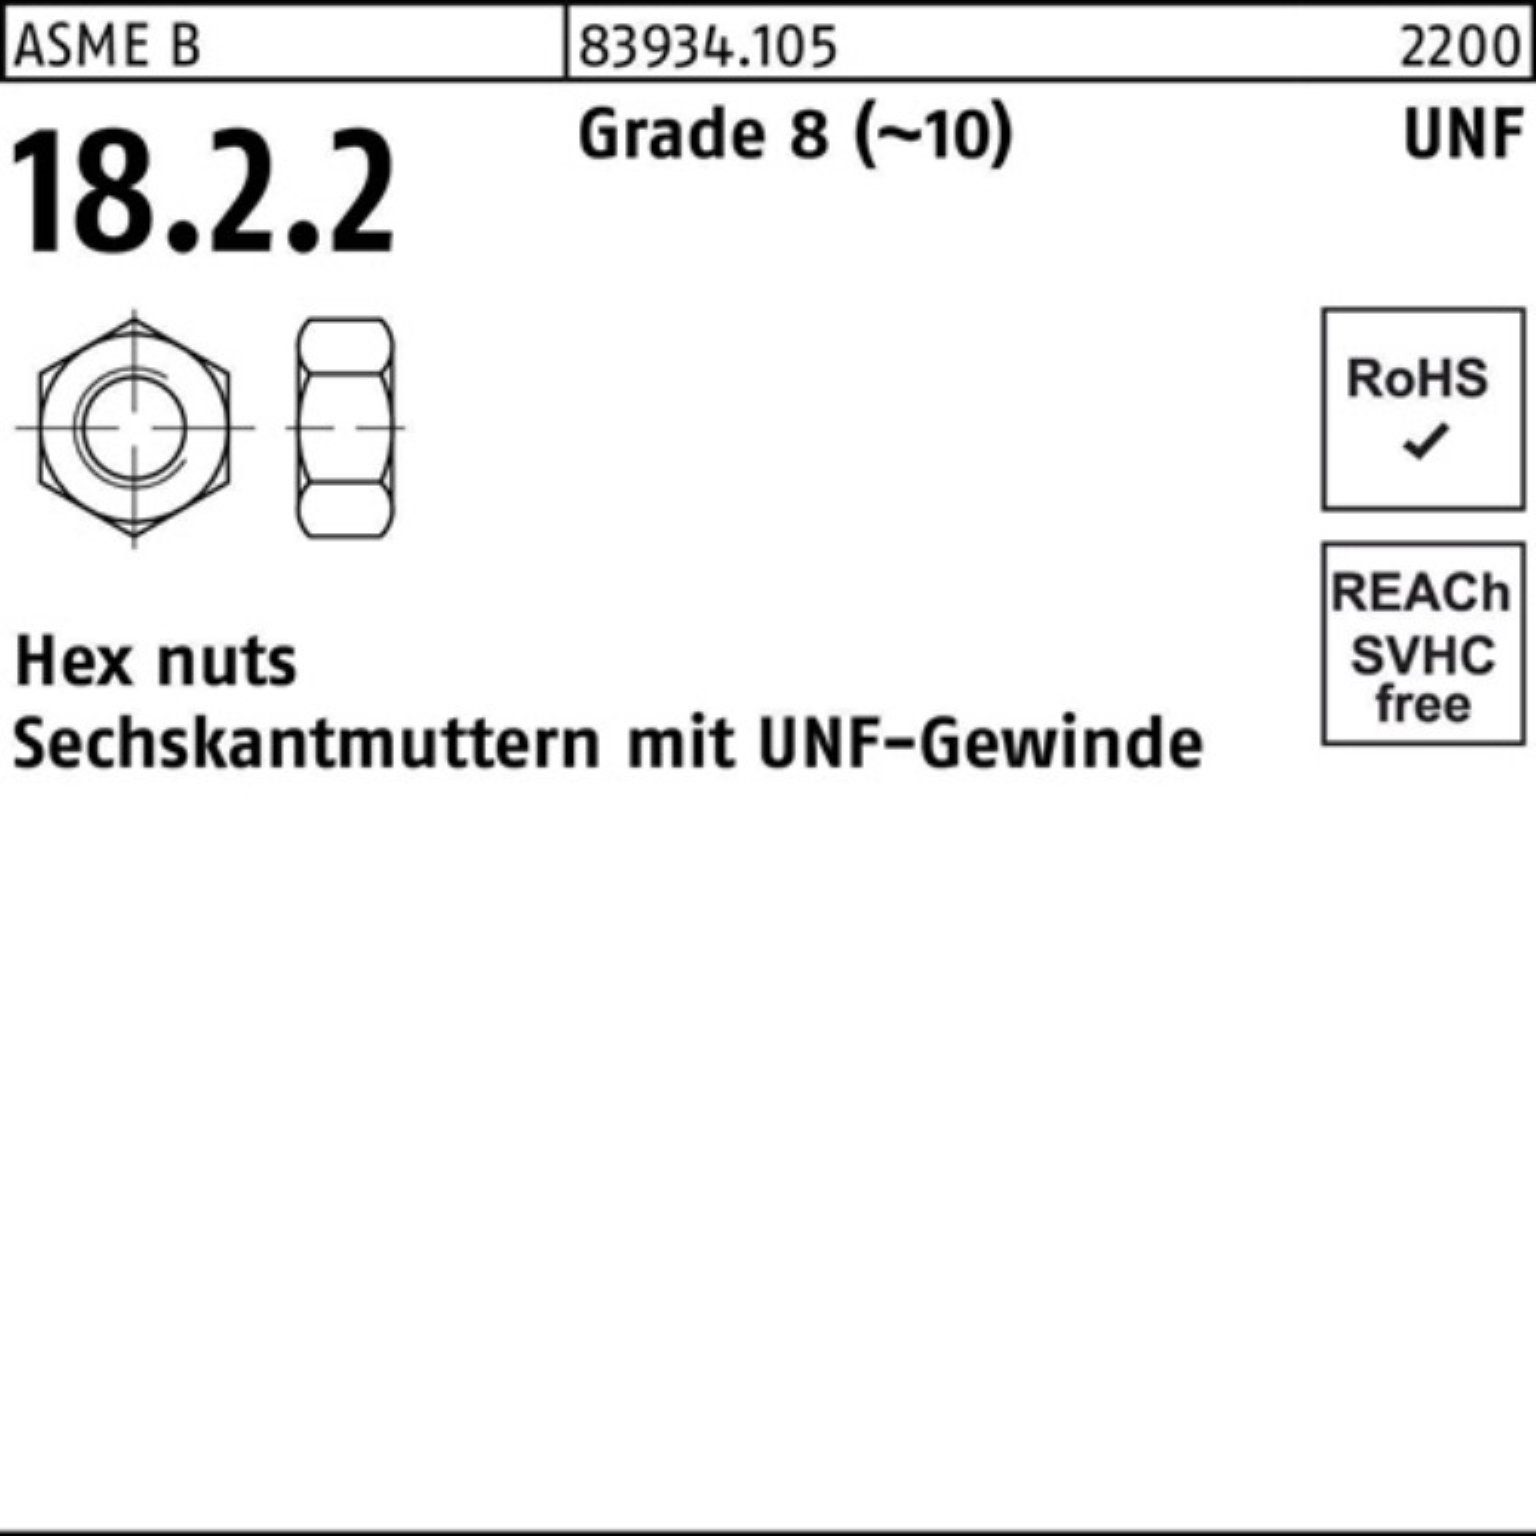 Reyher Muttern Sechskantmutter 8 100er (10) Grade 83934 UNF-Gewinde 50 Pack R 5/8 St